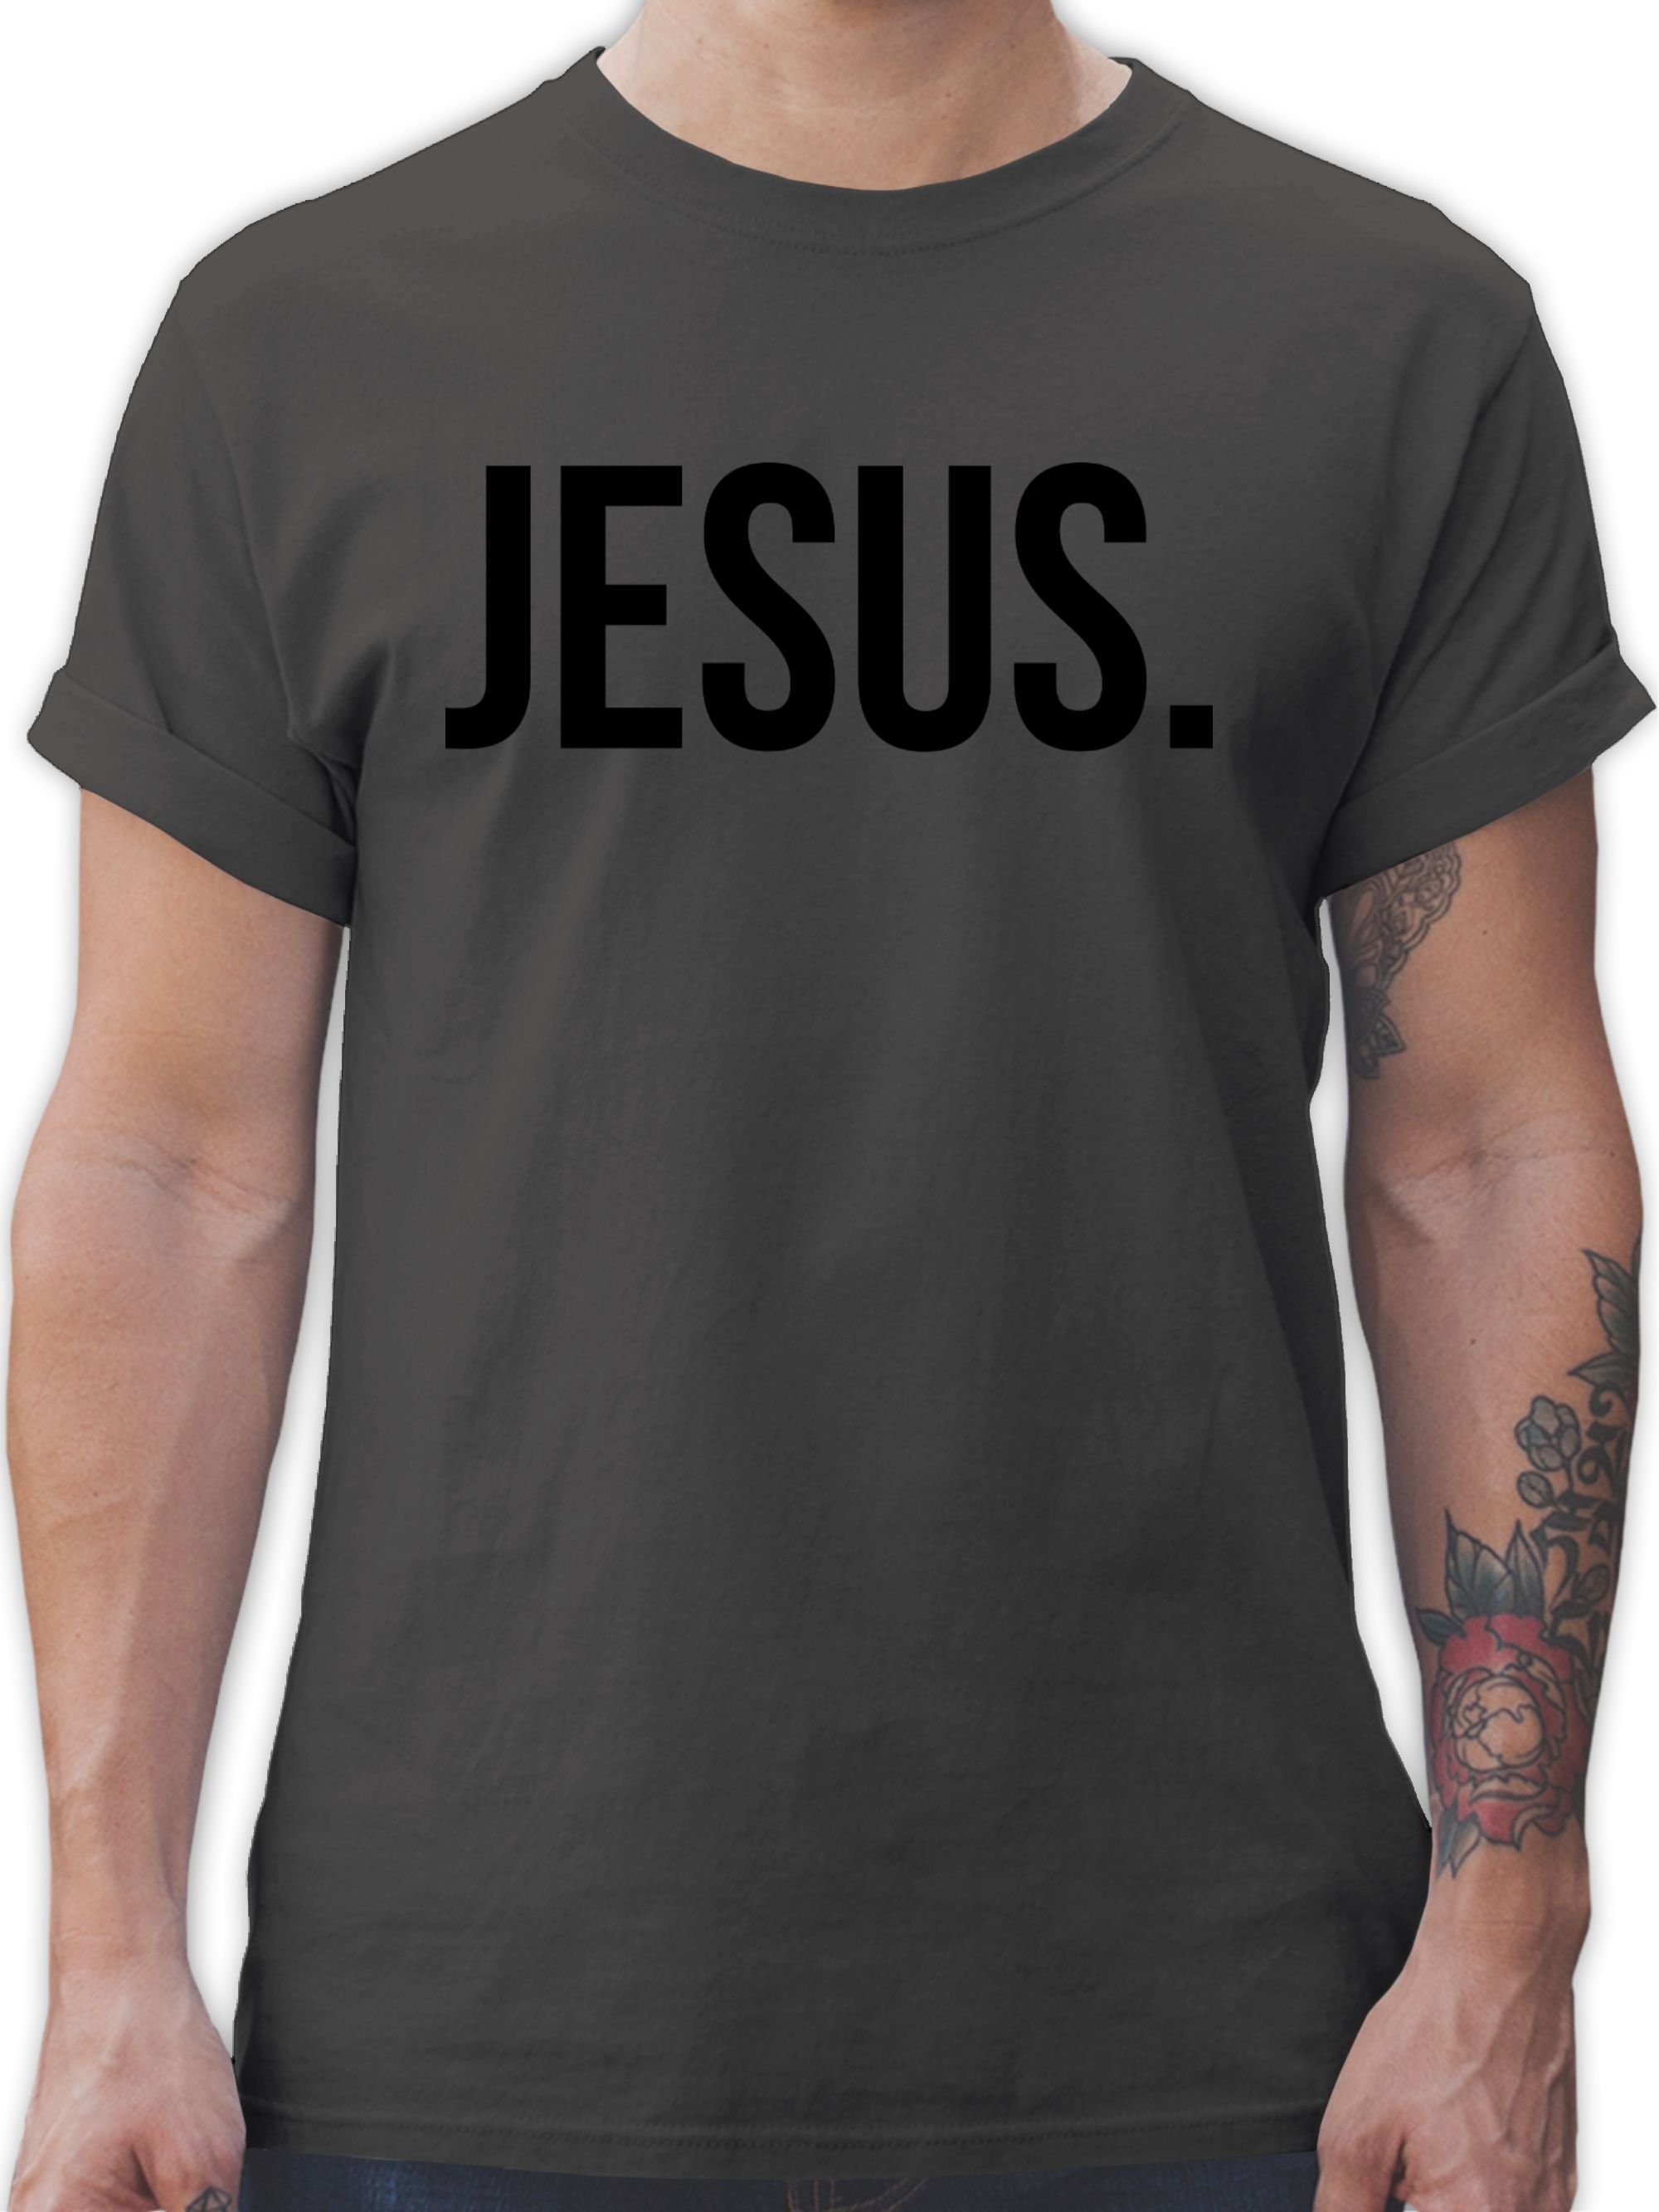 Shirtracer Dunkelgrau Christus Glaube Statement 3 Jesus T-Shirt Religion